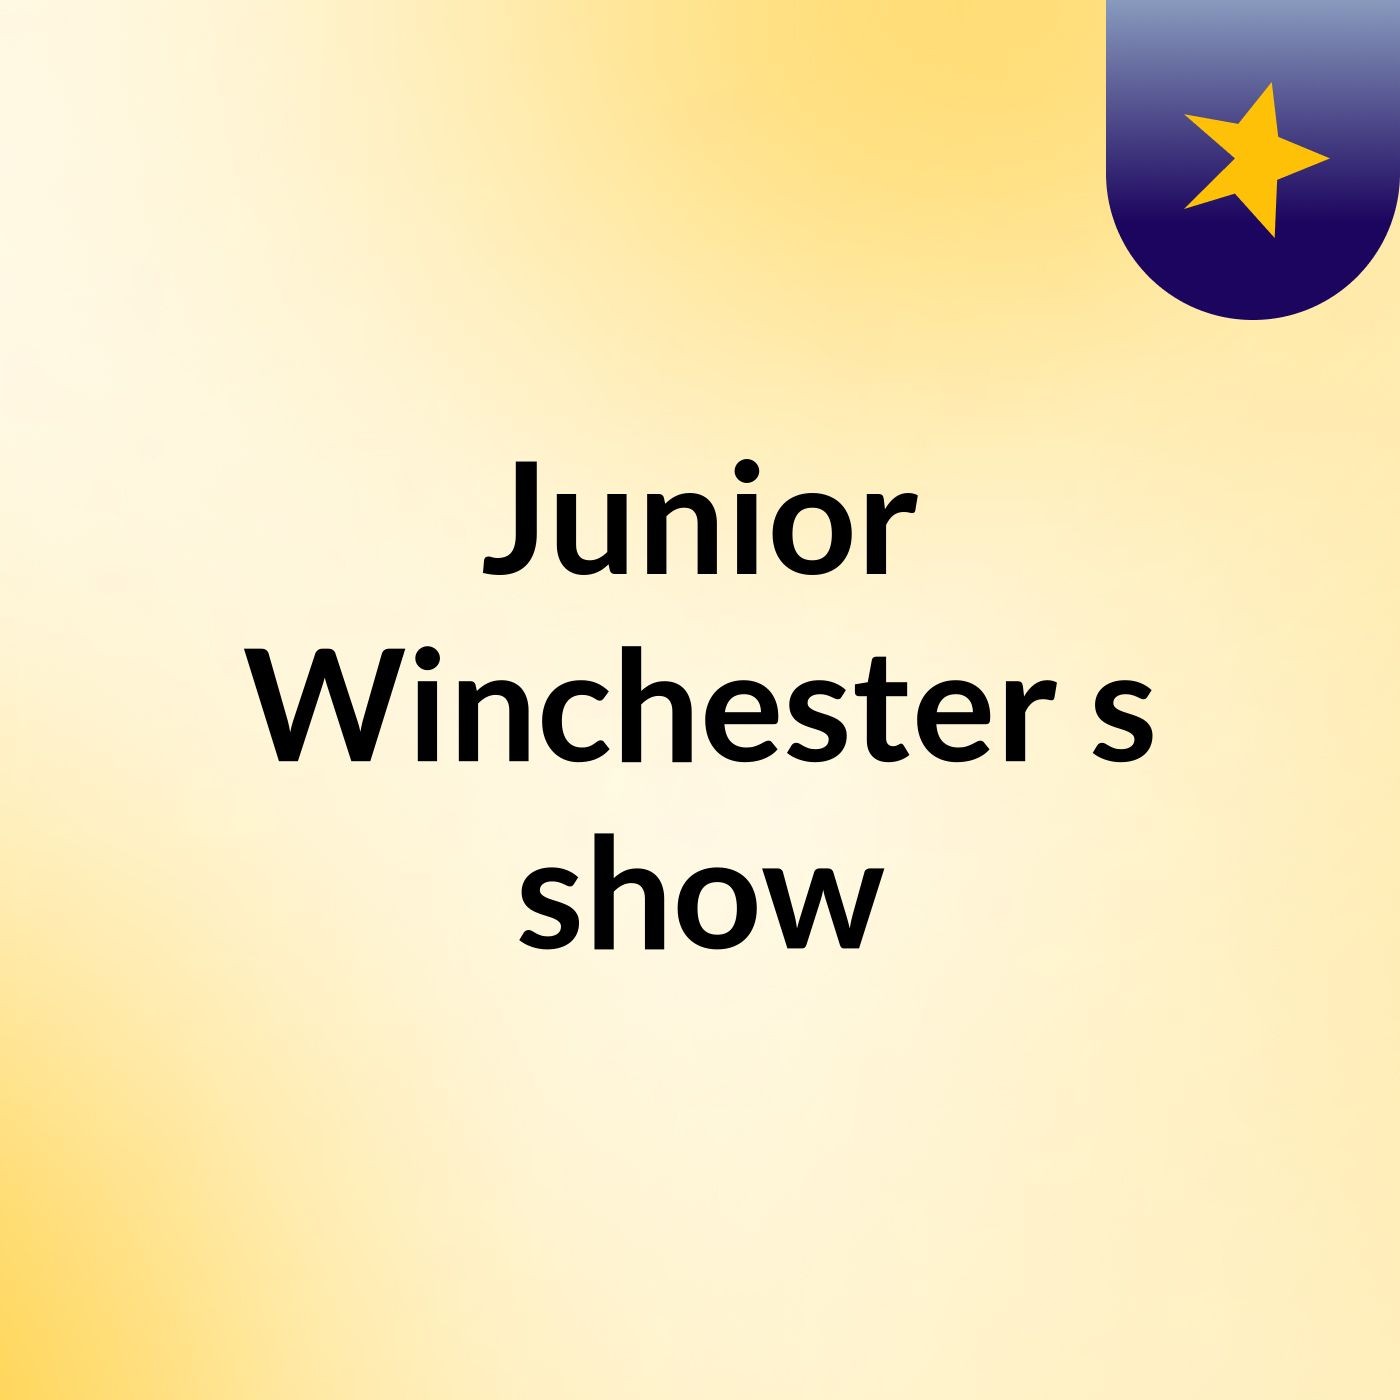 Junior Winchester's show